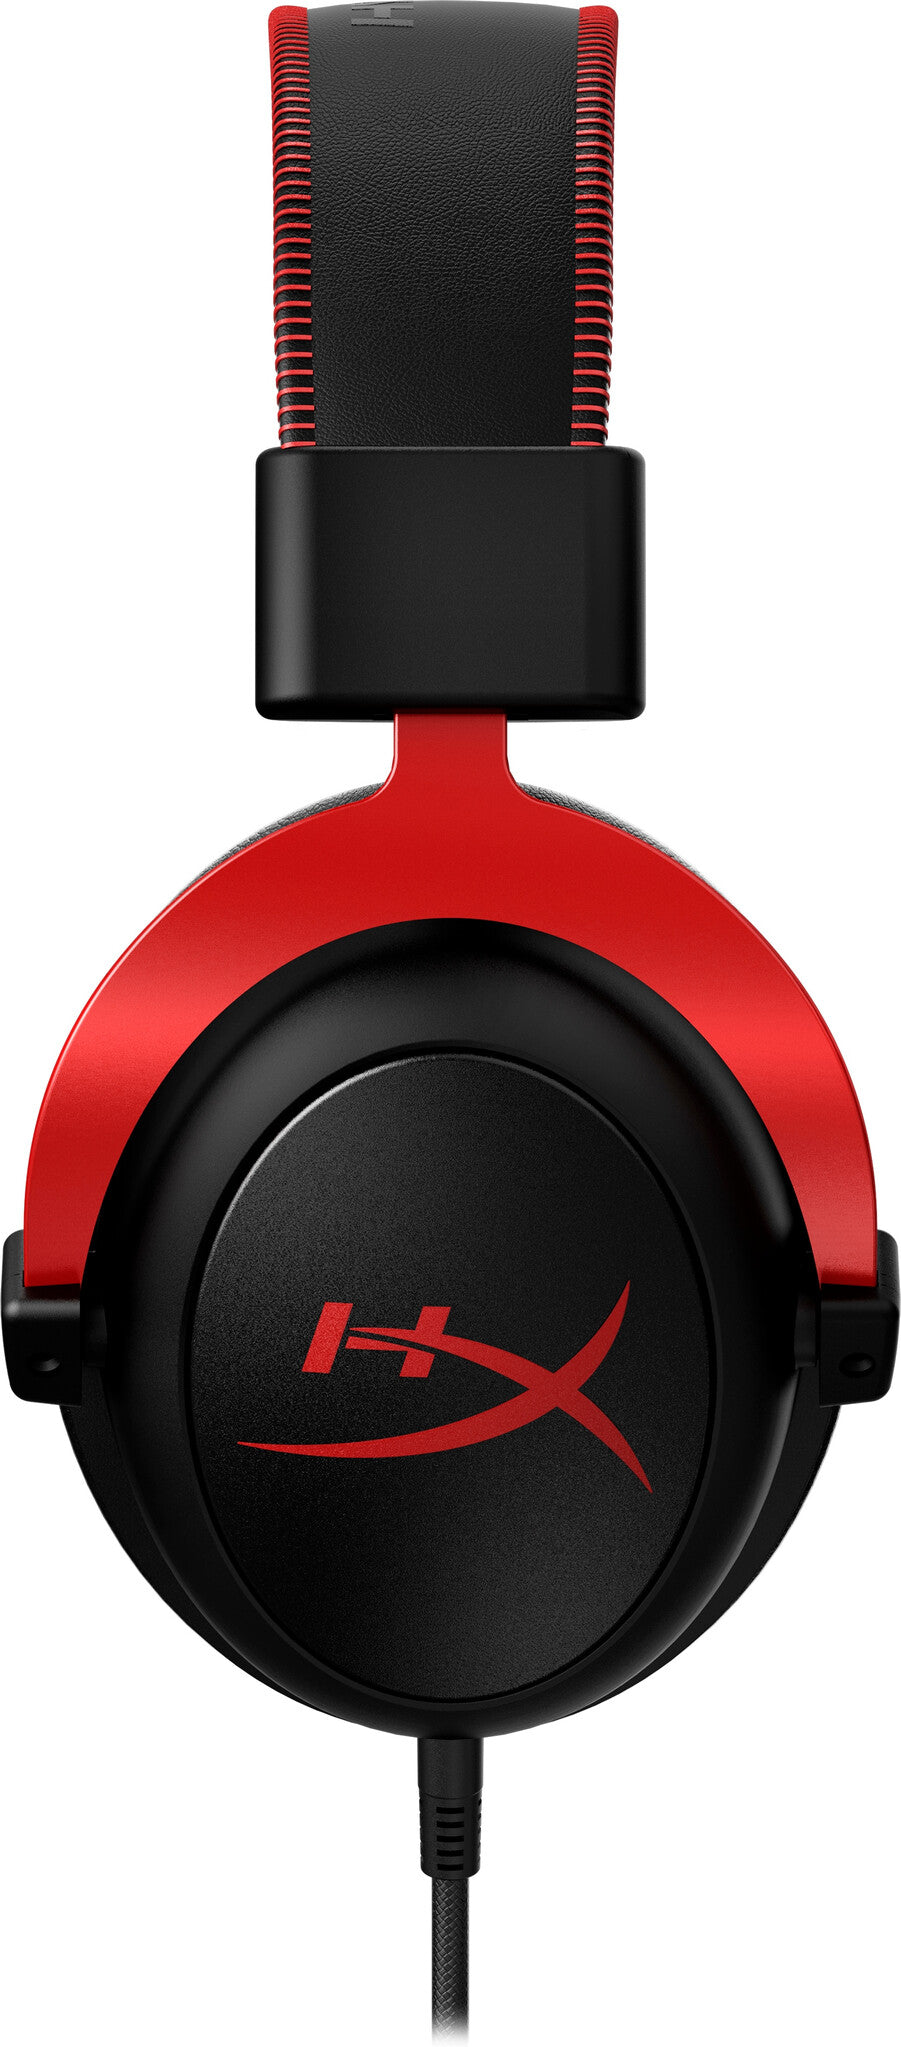 HyperX Cloud II - Wired Gaming Headset in Black / Red